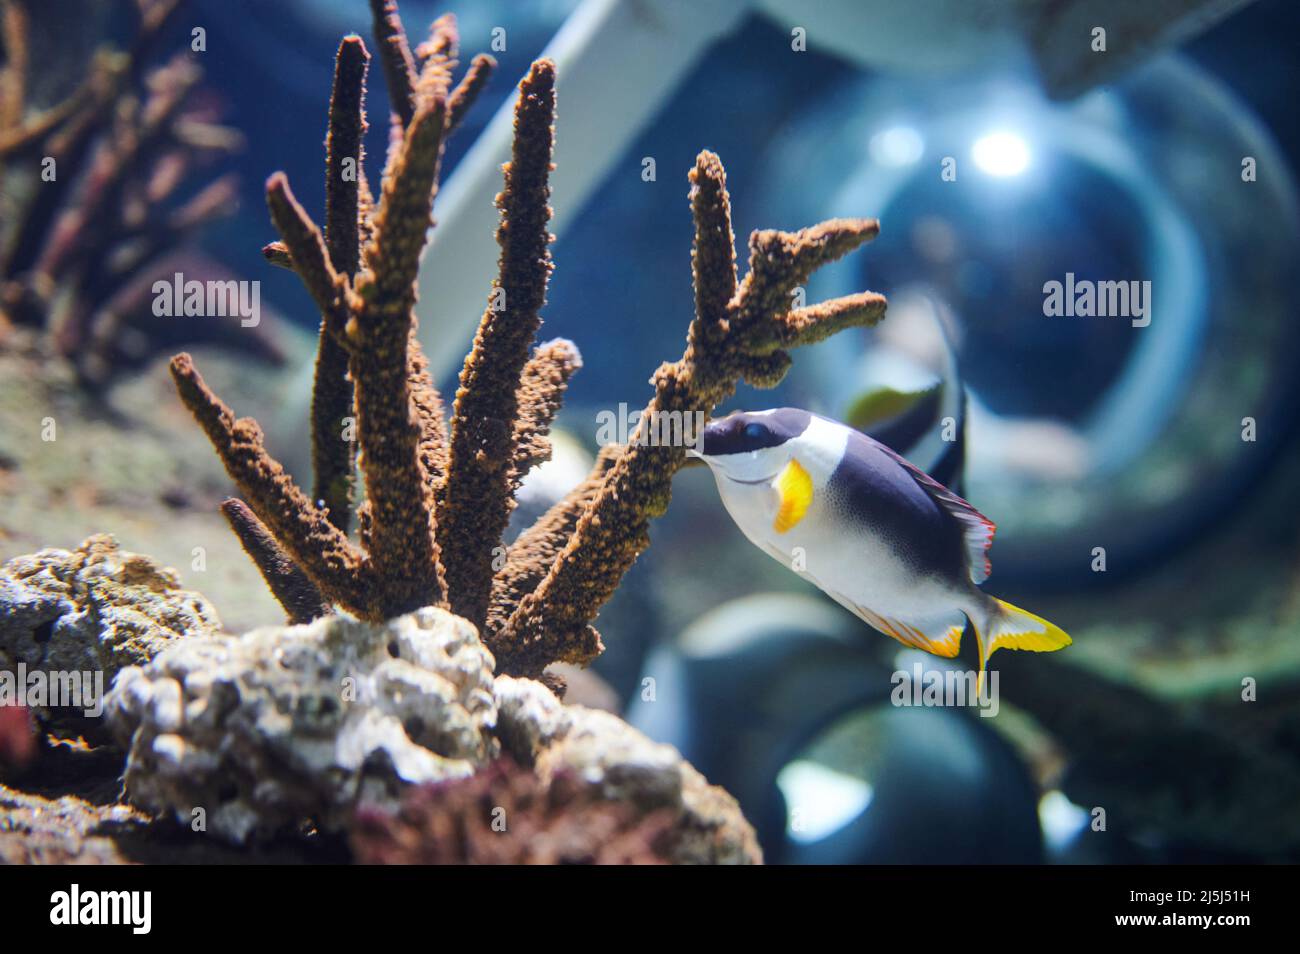 Peces de colores junto al arrecife de coral a primera vista Foto de stock